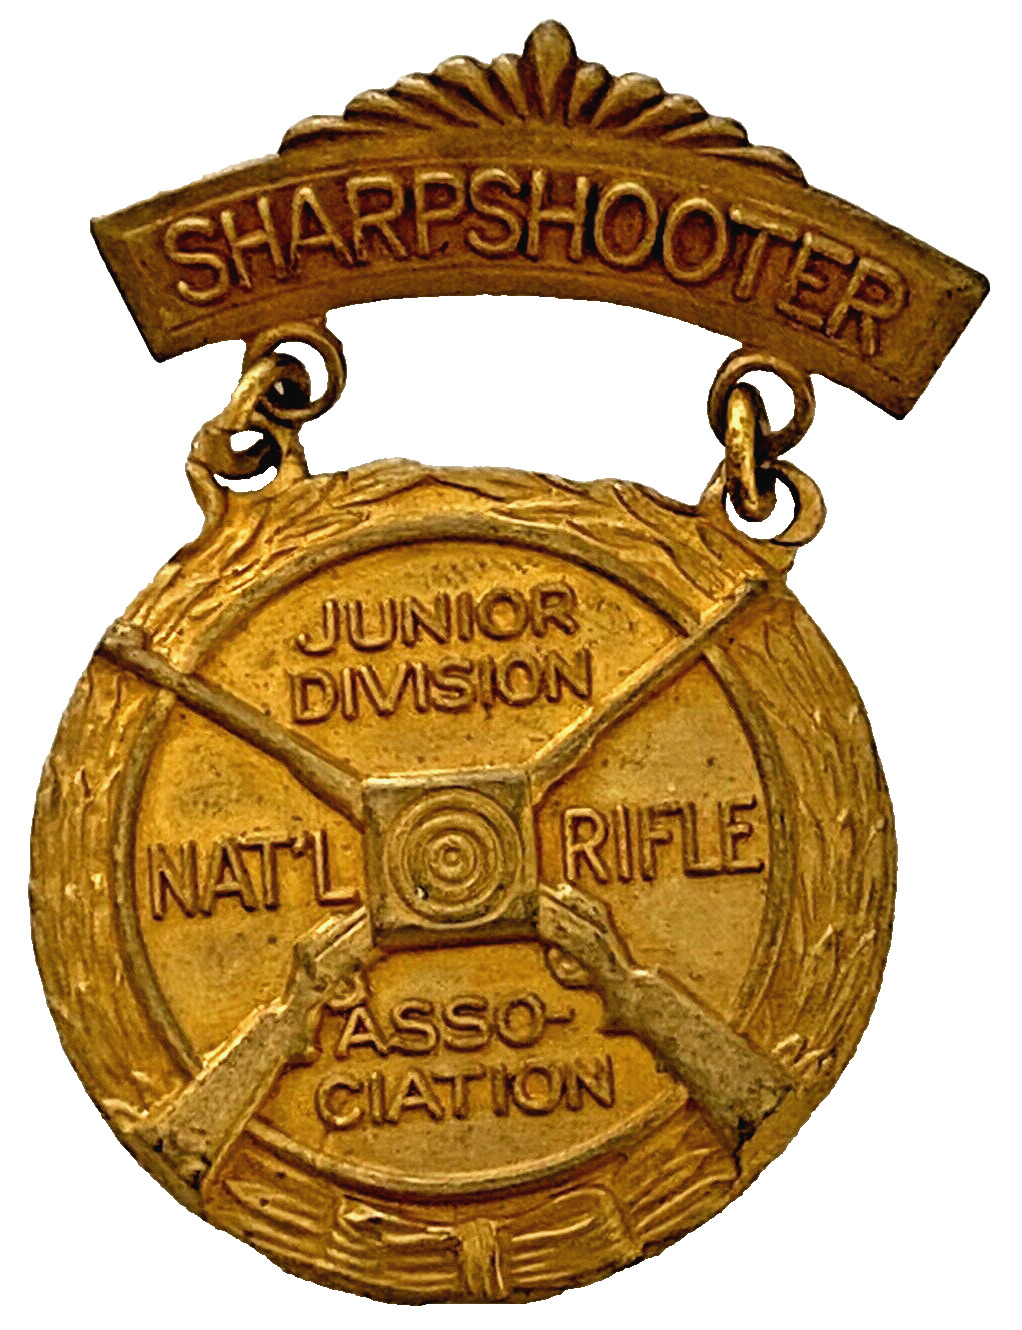 VINTAGE NRA SHARP SHOOTER MEDAL by BLACKINTON  NATIONAL RIFLE ASSOCIATION